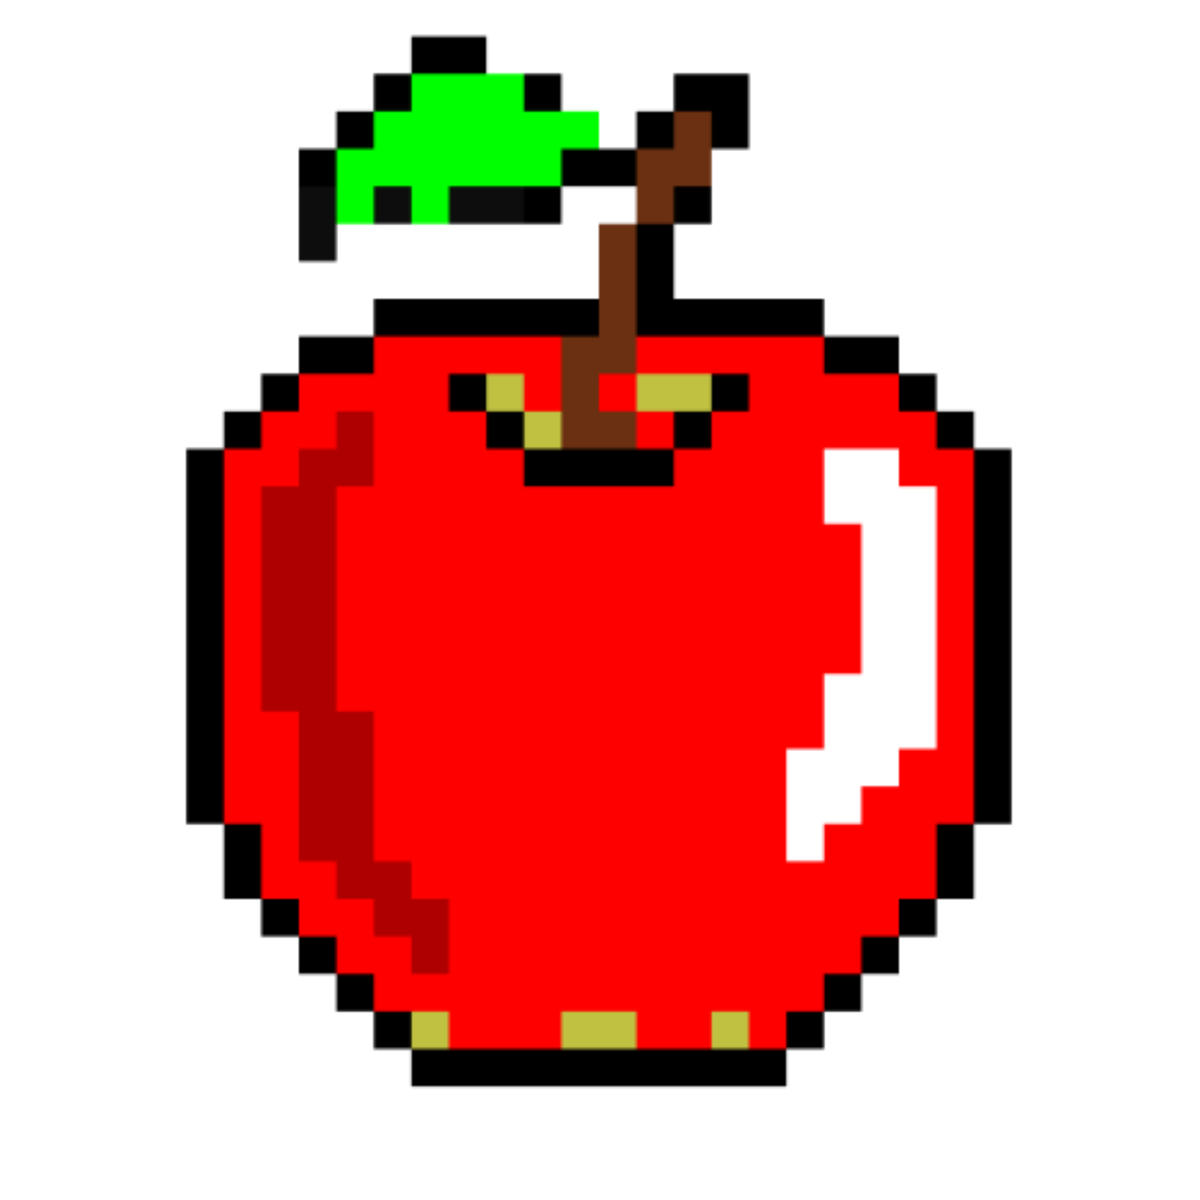 Ryoha Kosako ポートフォリオを追加しました ドットでポチポチ作ったリンゴです 素材の配布先のリンクや作り方は後日 追記していきます リンゴ ドット絵で描いたリンゴ T Co 35qrgbqztj ドット絵 Pix